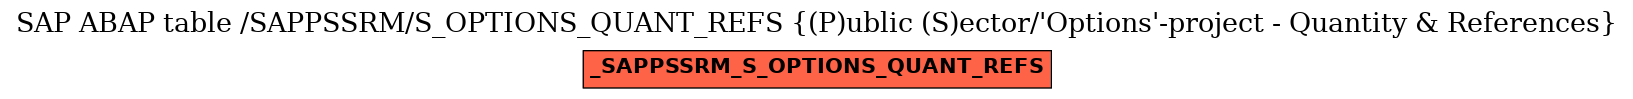 E-R Diagram for table /SAPPSSRM/S_OPTIONS_QUANT_REFS ((P)ublic (S)ector/'Options'-project - Quantity & References)